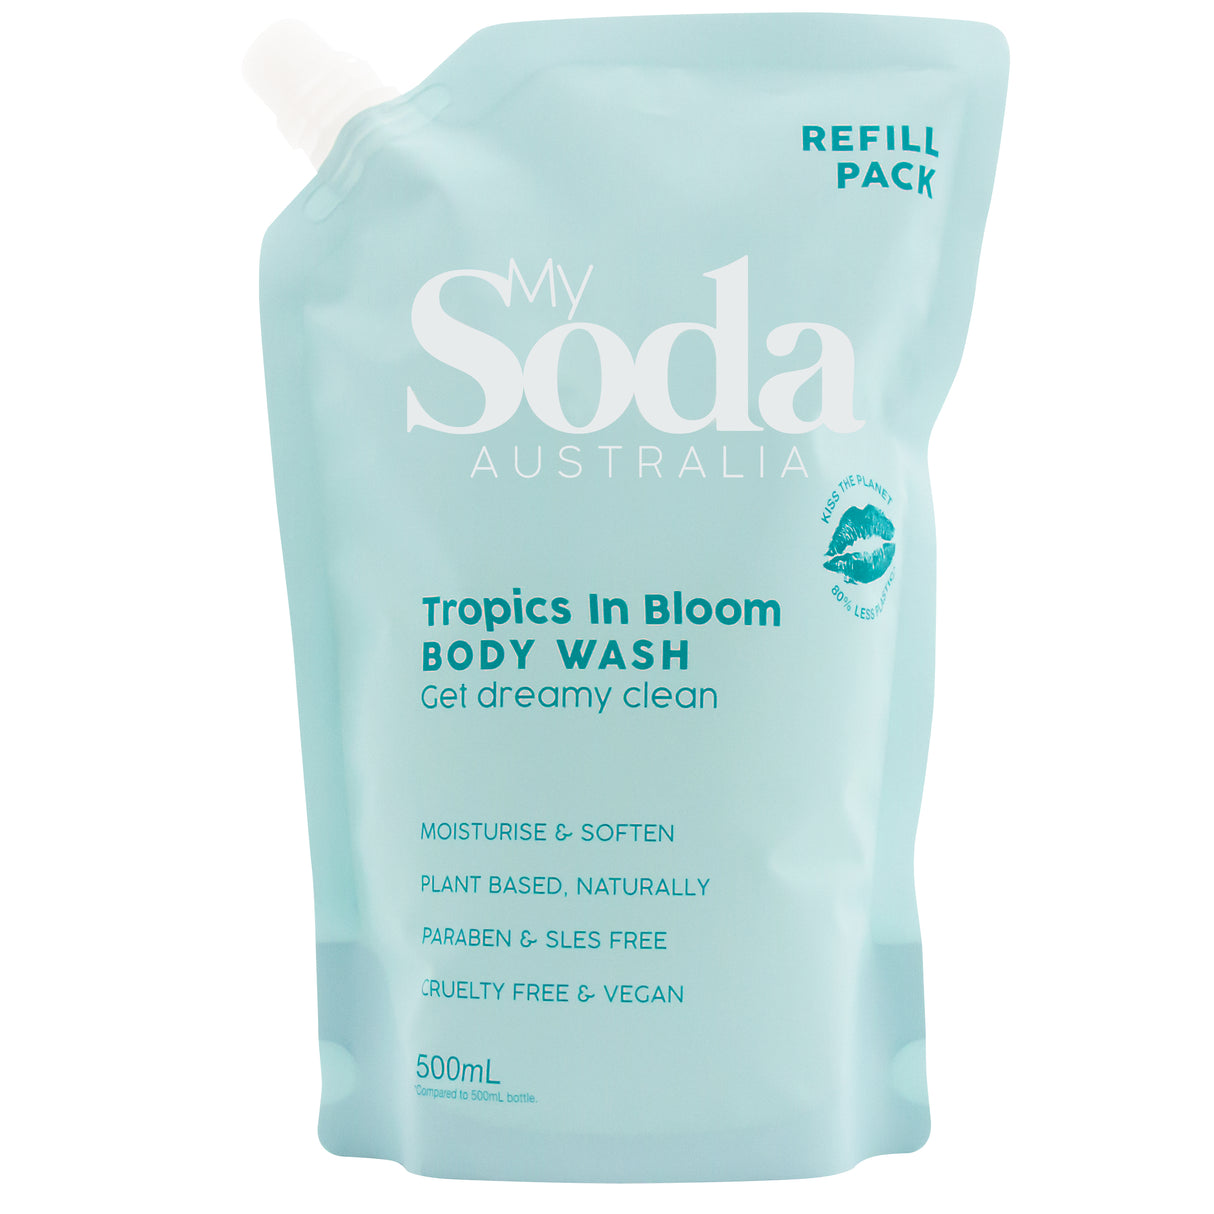 My Soda Tropics in Bloom Body Wash Refill 500ml